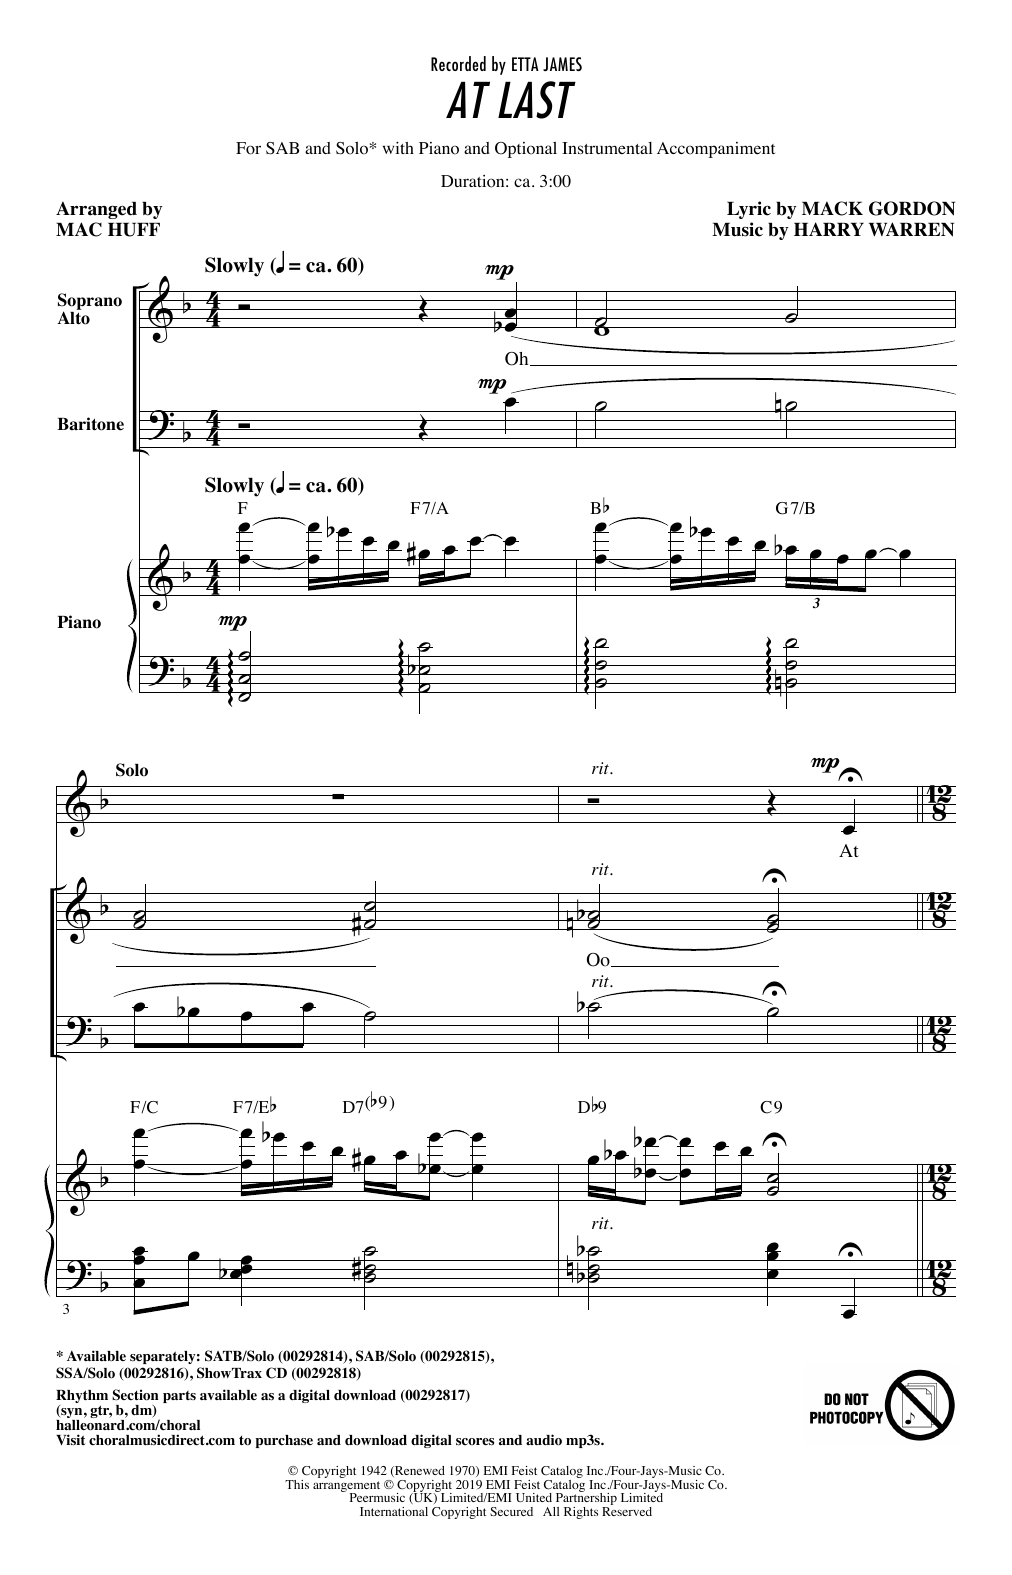 Etta James At Last (arr. Mac Huff) Sheet Music Notes & Chords for SSA Choir - Download or Print PDF